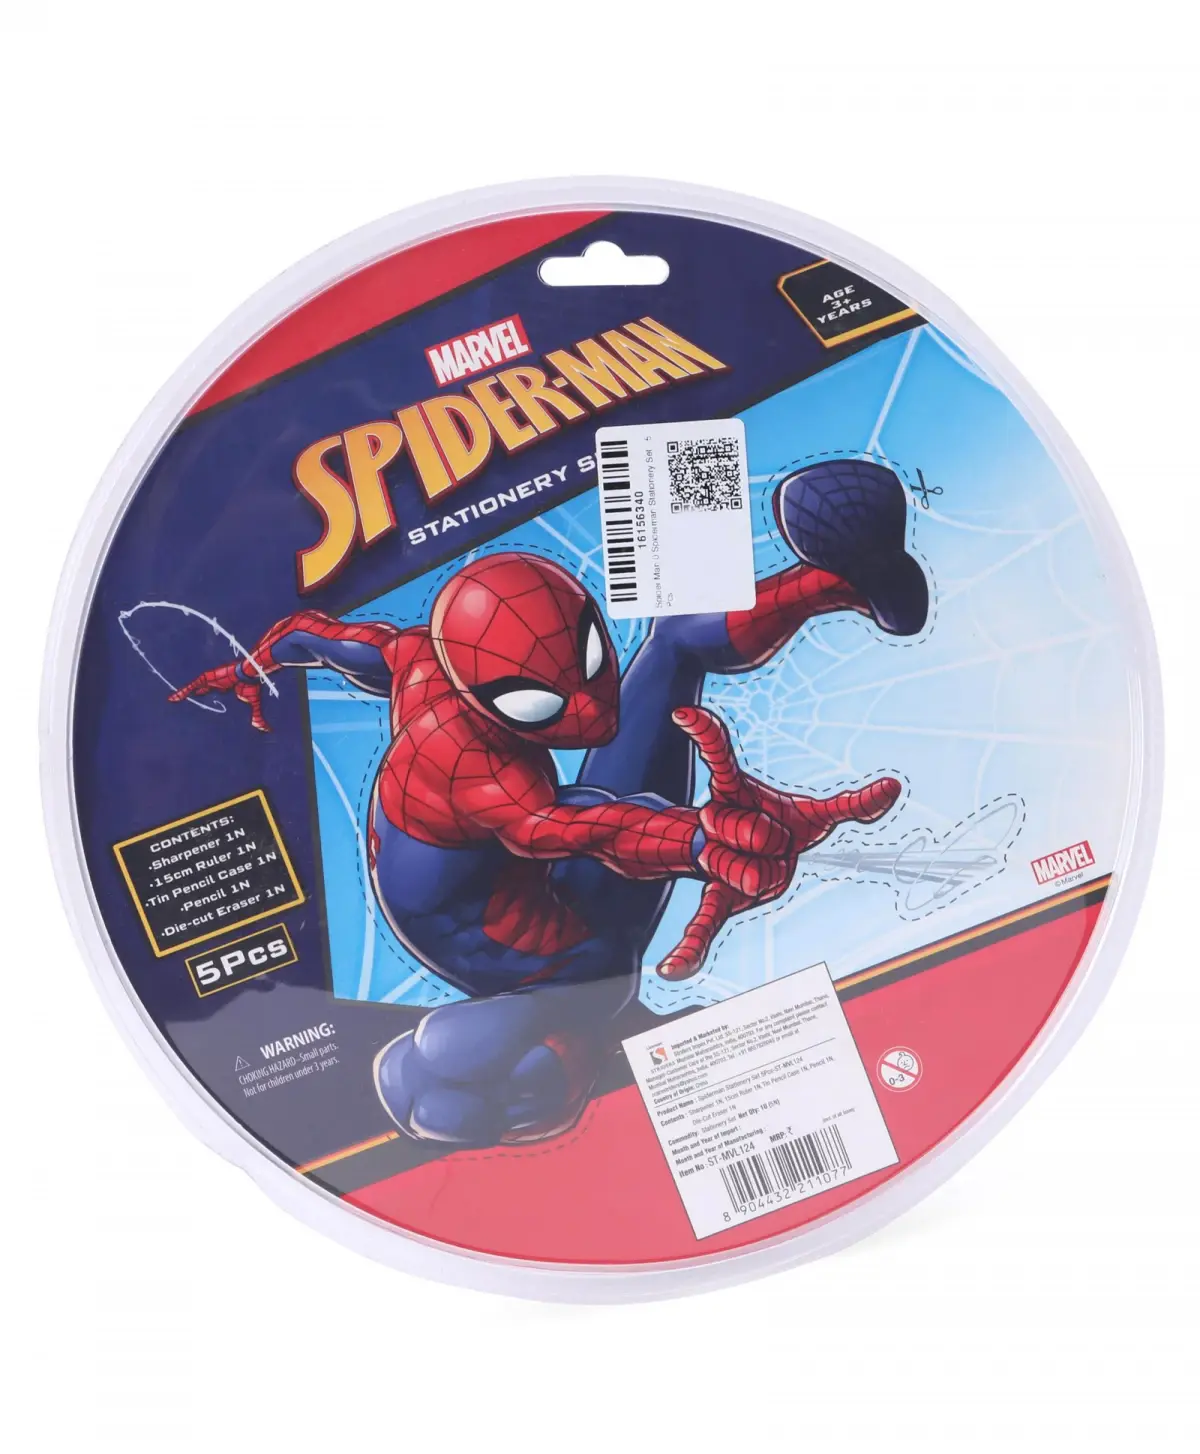 Striders Spiderman Stationery Set 5Pcs, 3Y+, Multicolour